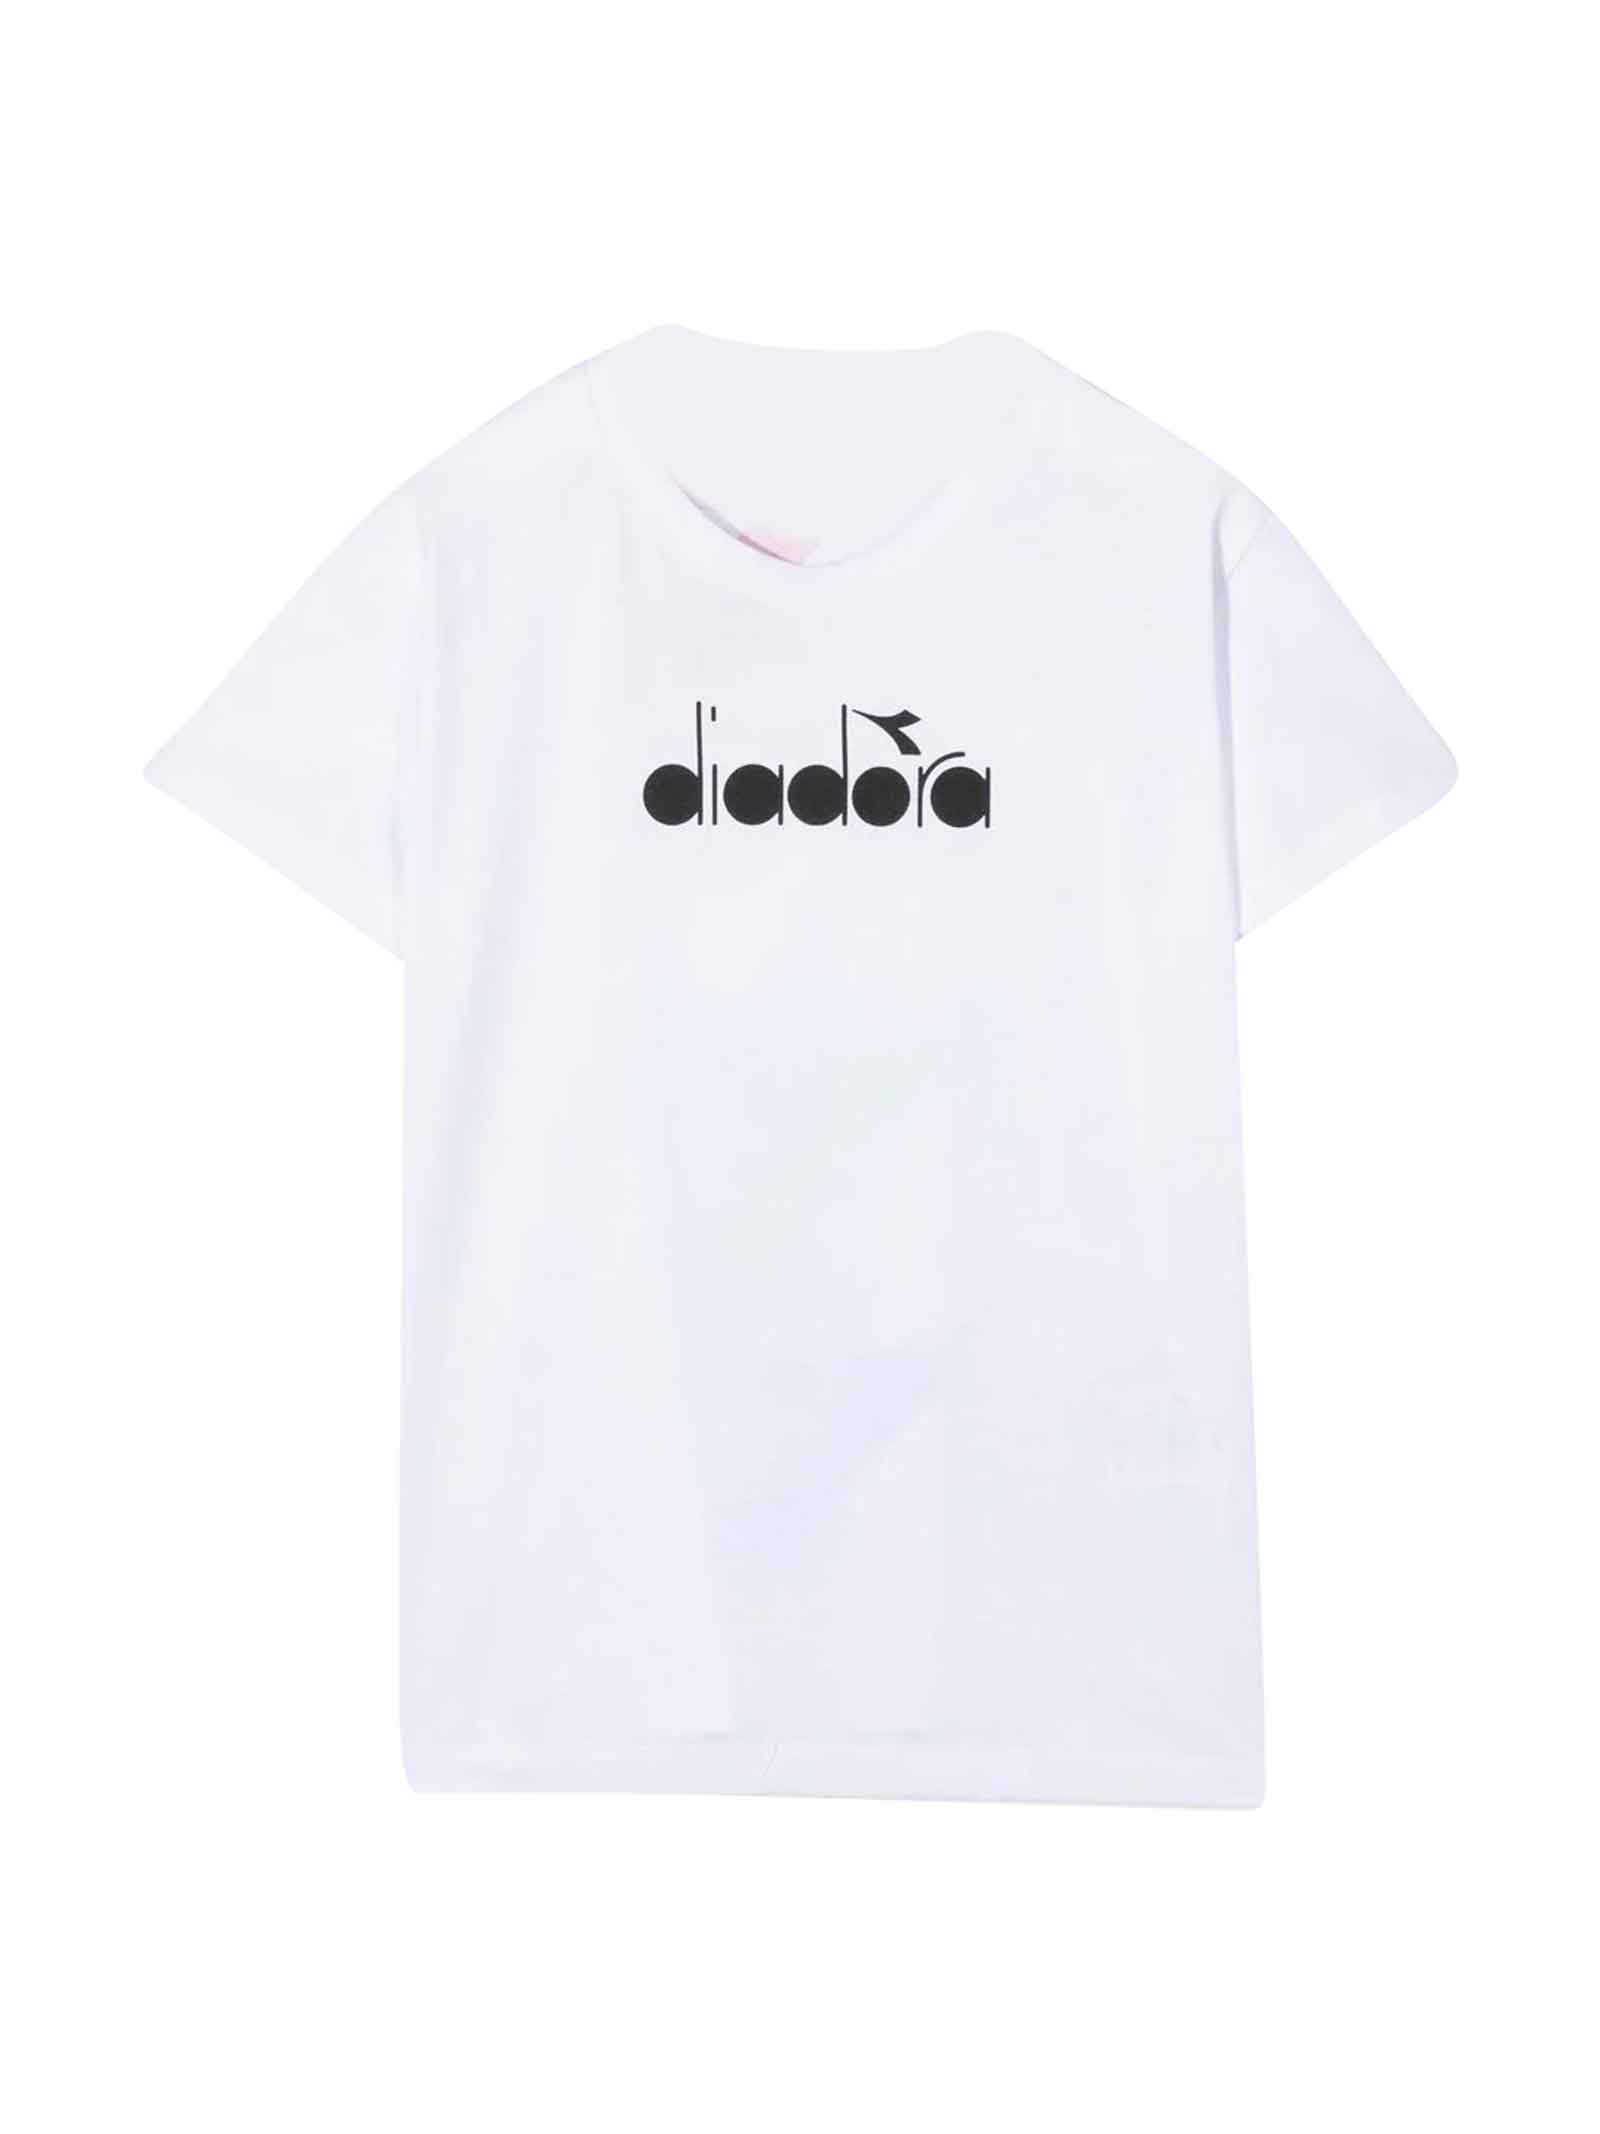 Diadora White T-shirt Teen Boy